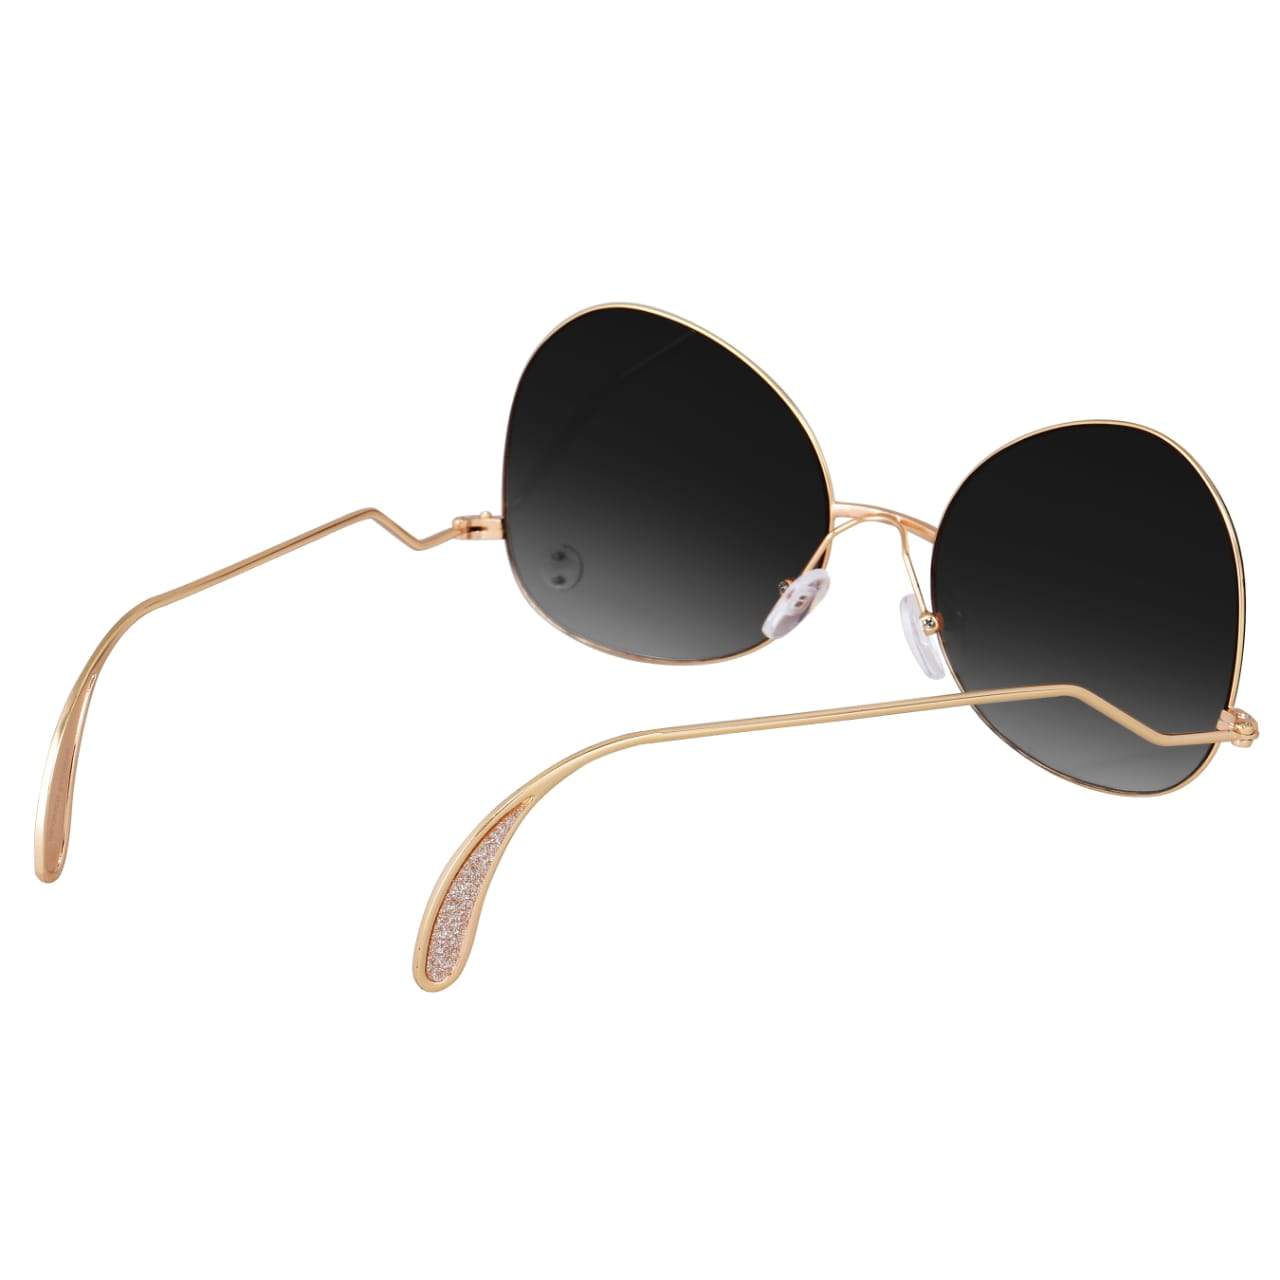 Round Rimless Aviator Gold Black Gradient Sunglasses For Women-Unique and Classy